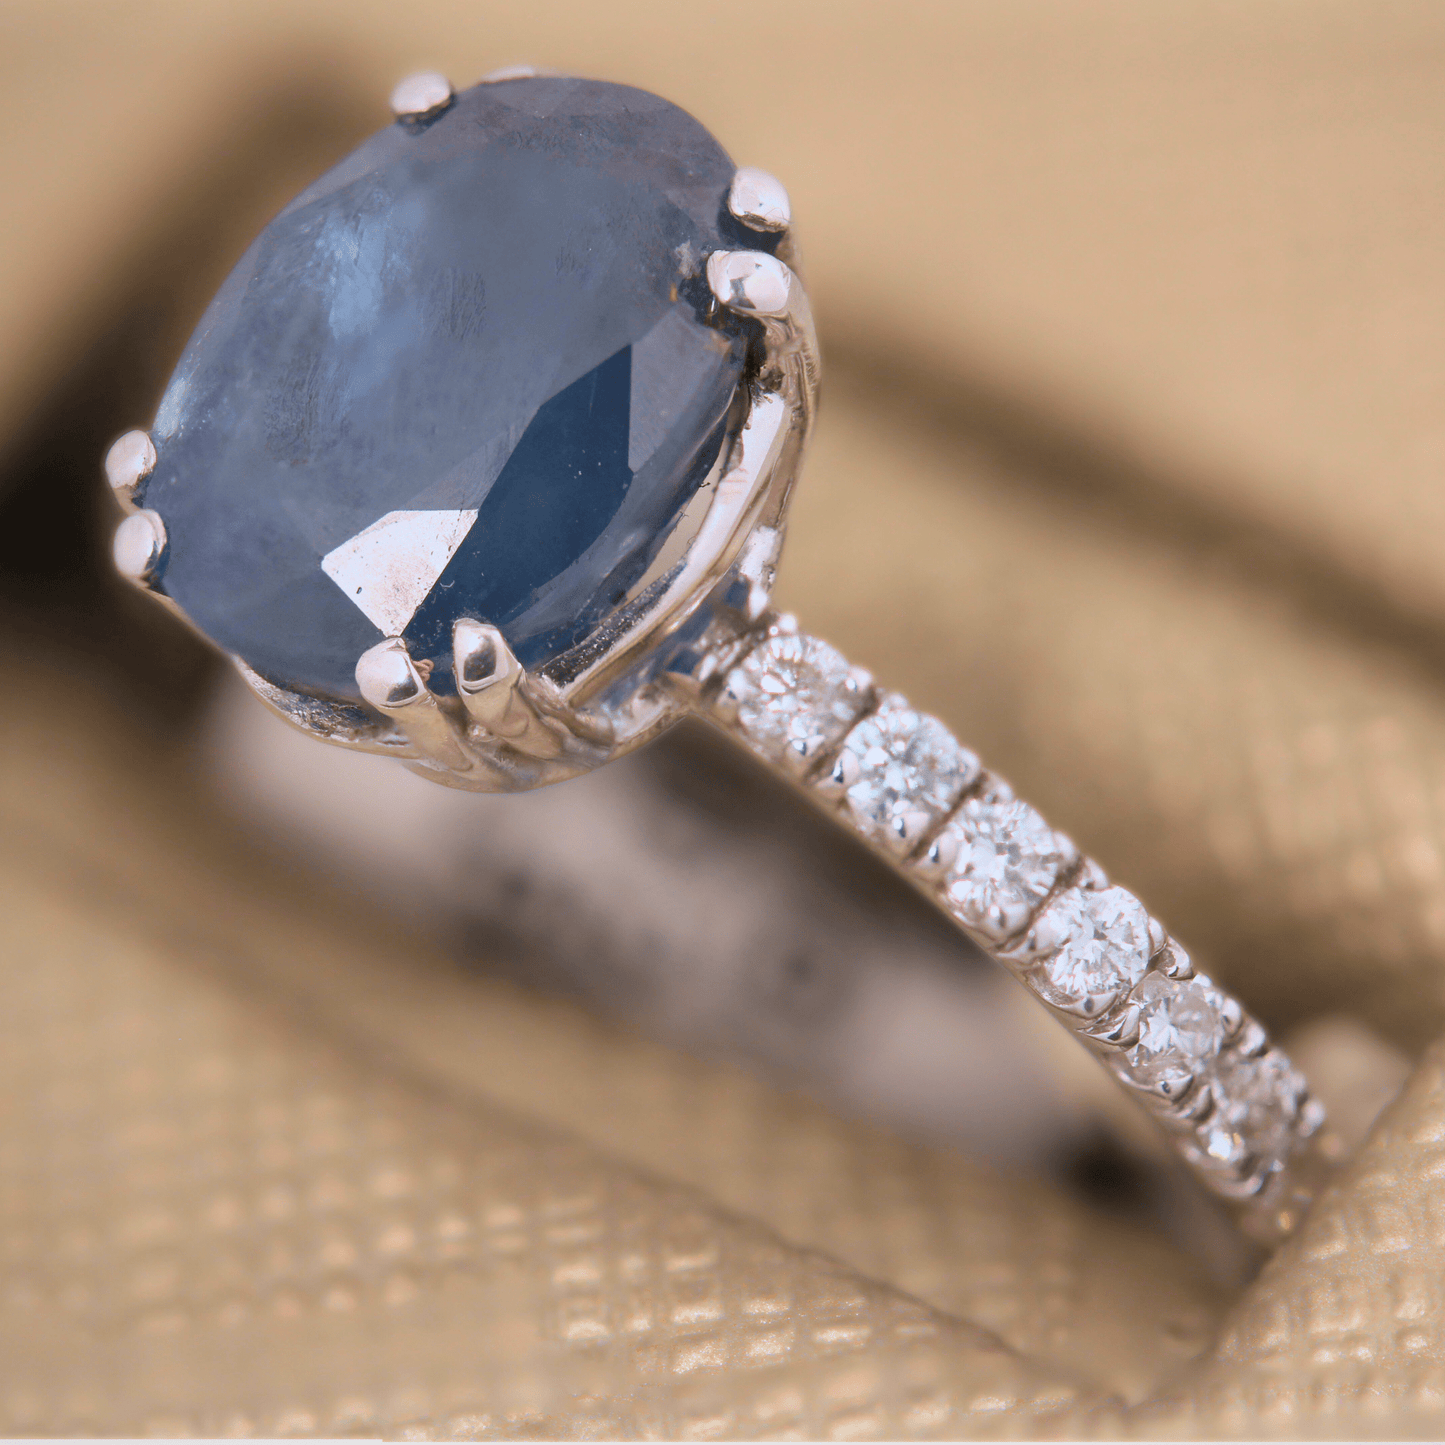 Sapphire and Diamond 14k White Gold Ring